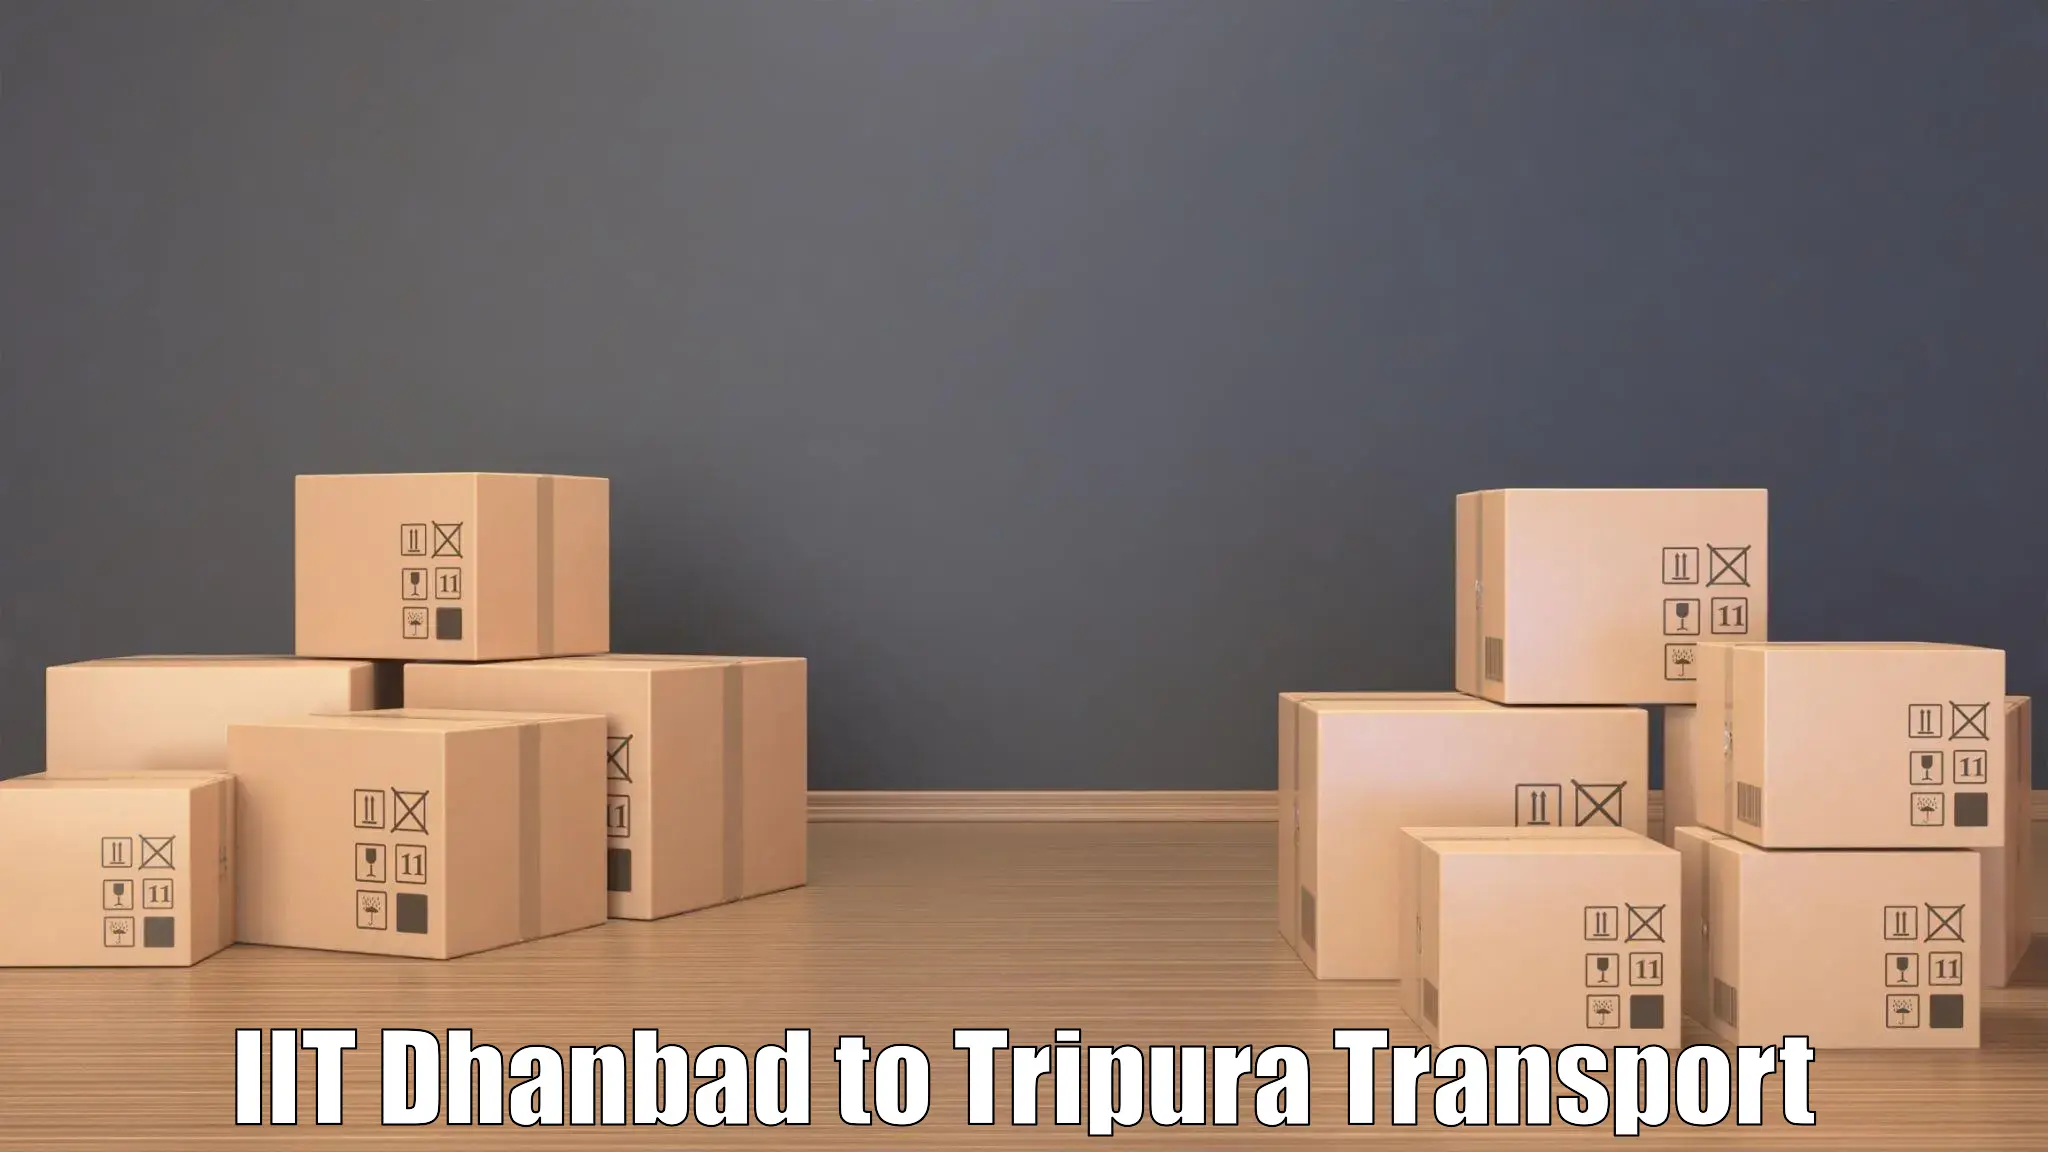 Online transport IIT Dhanbad to Udaipur Tripura